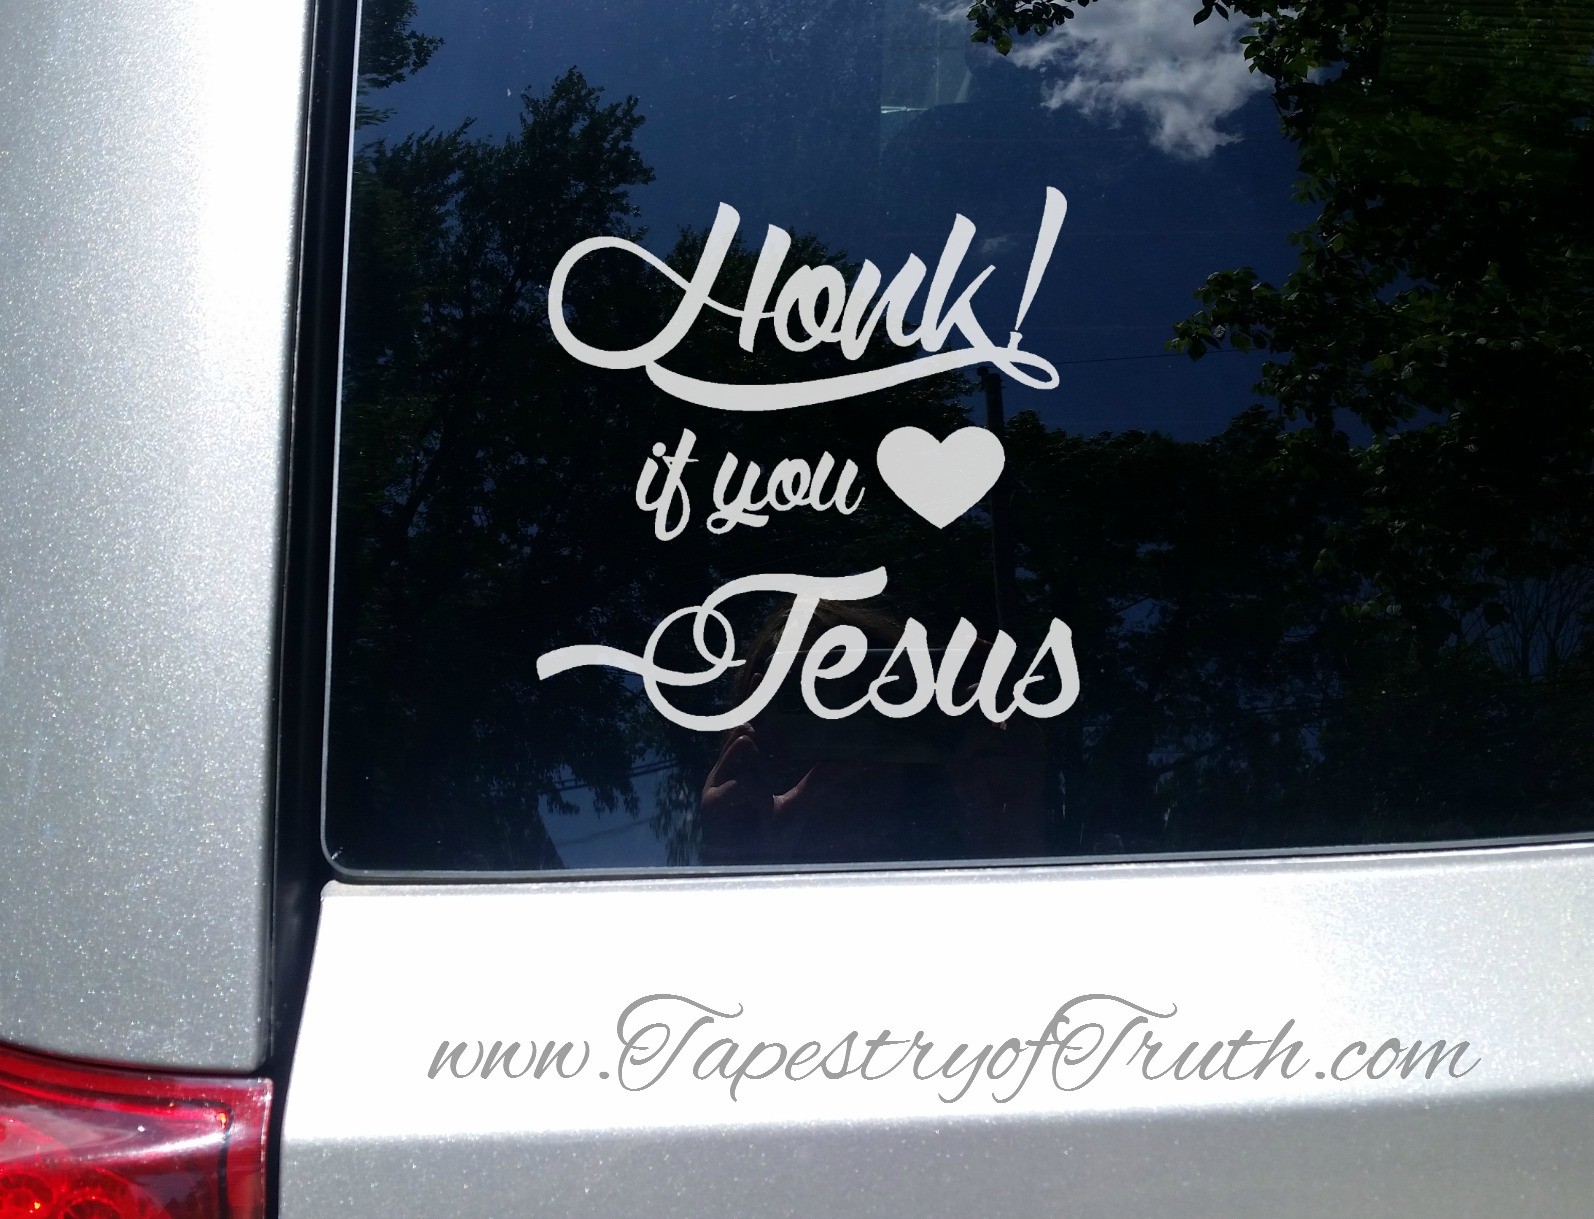 Honk If You Love Jesus Sticker